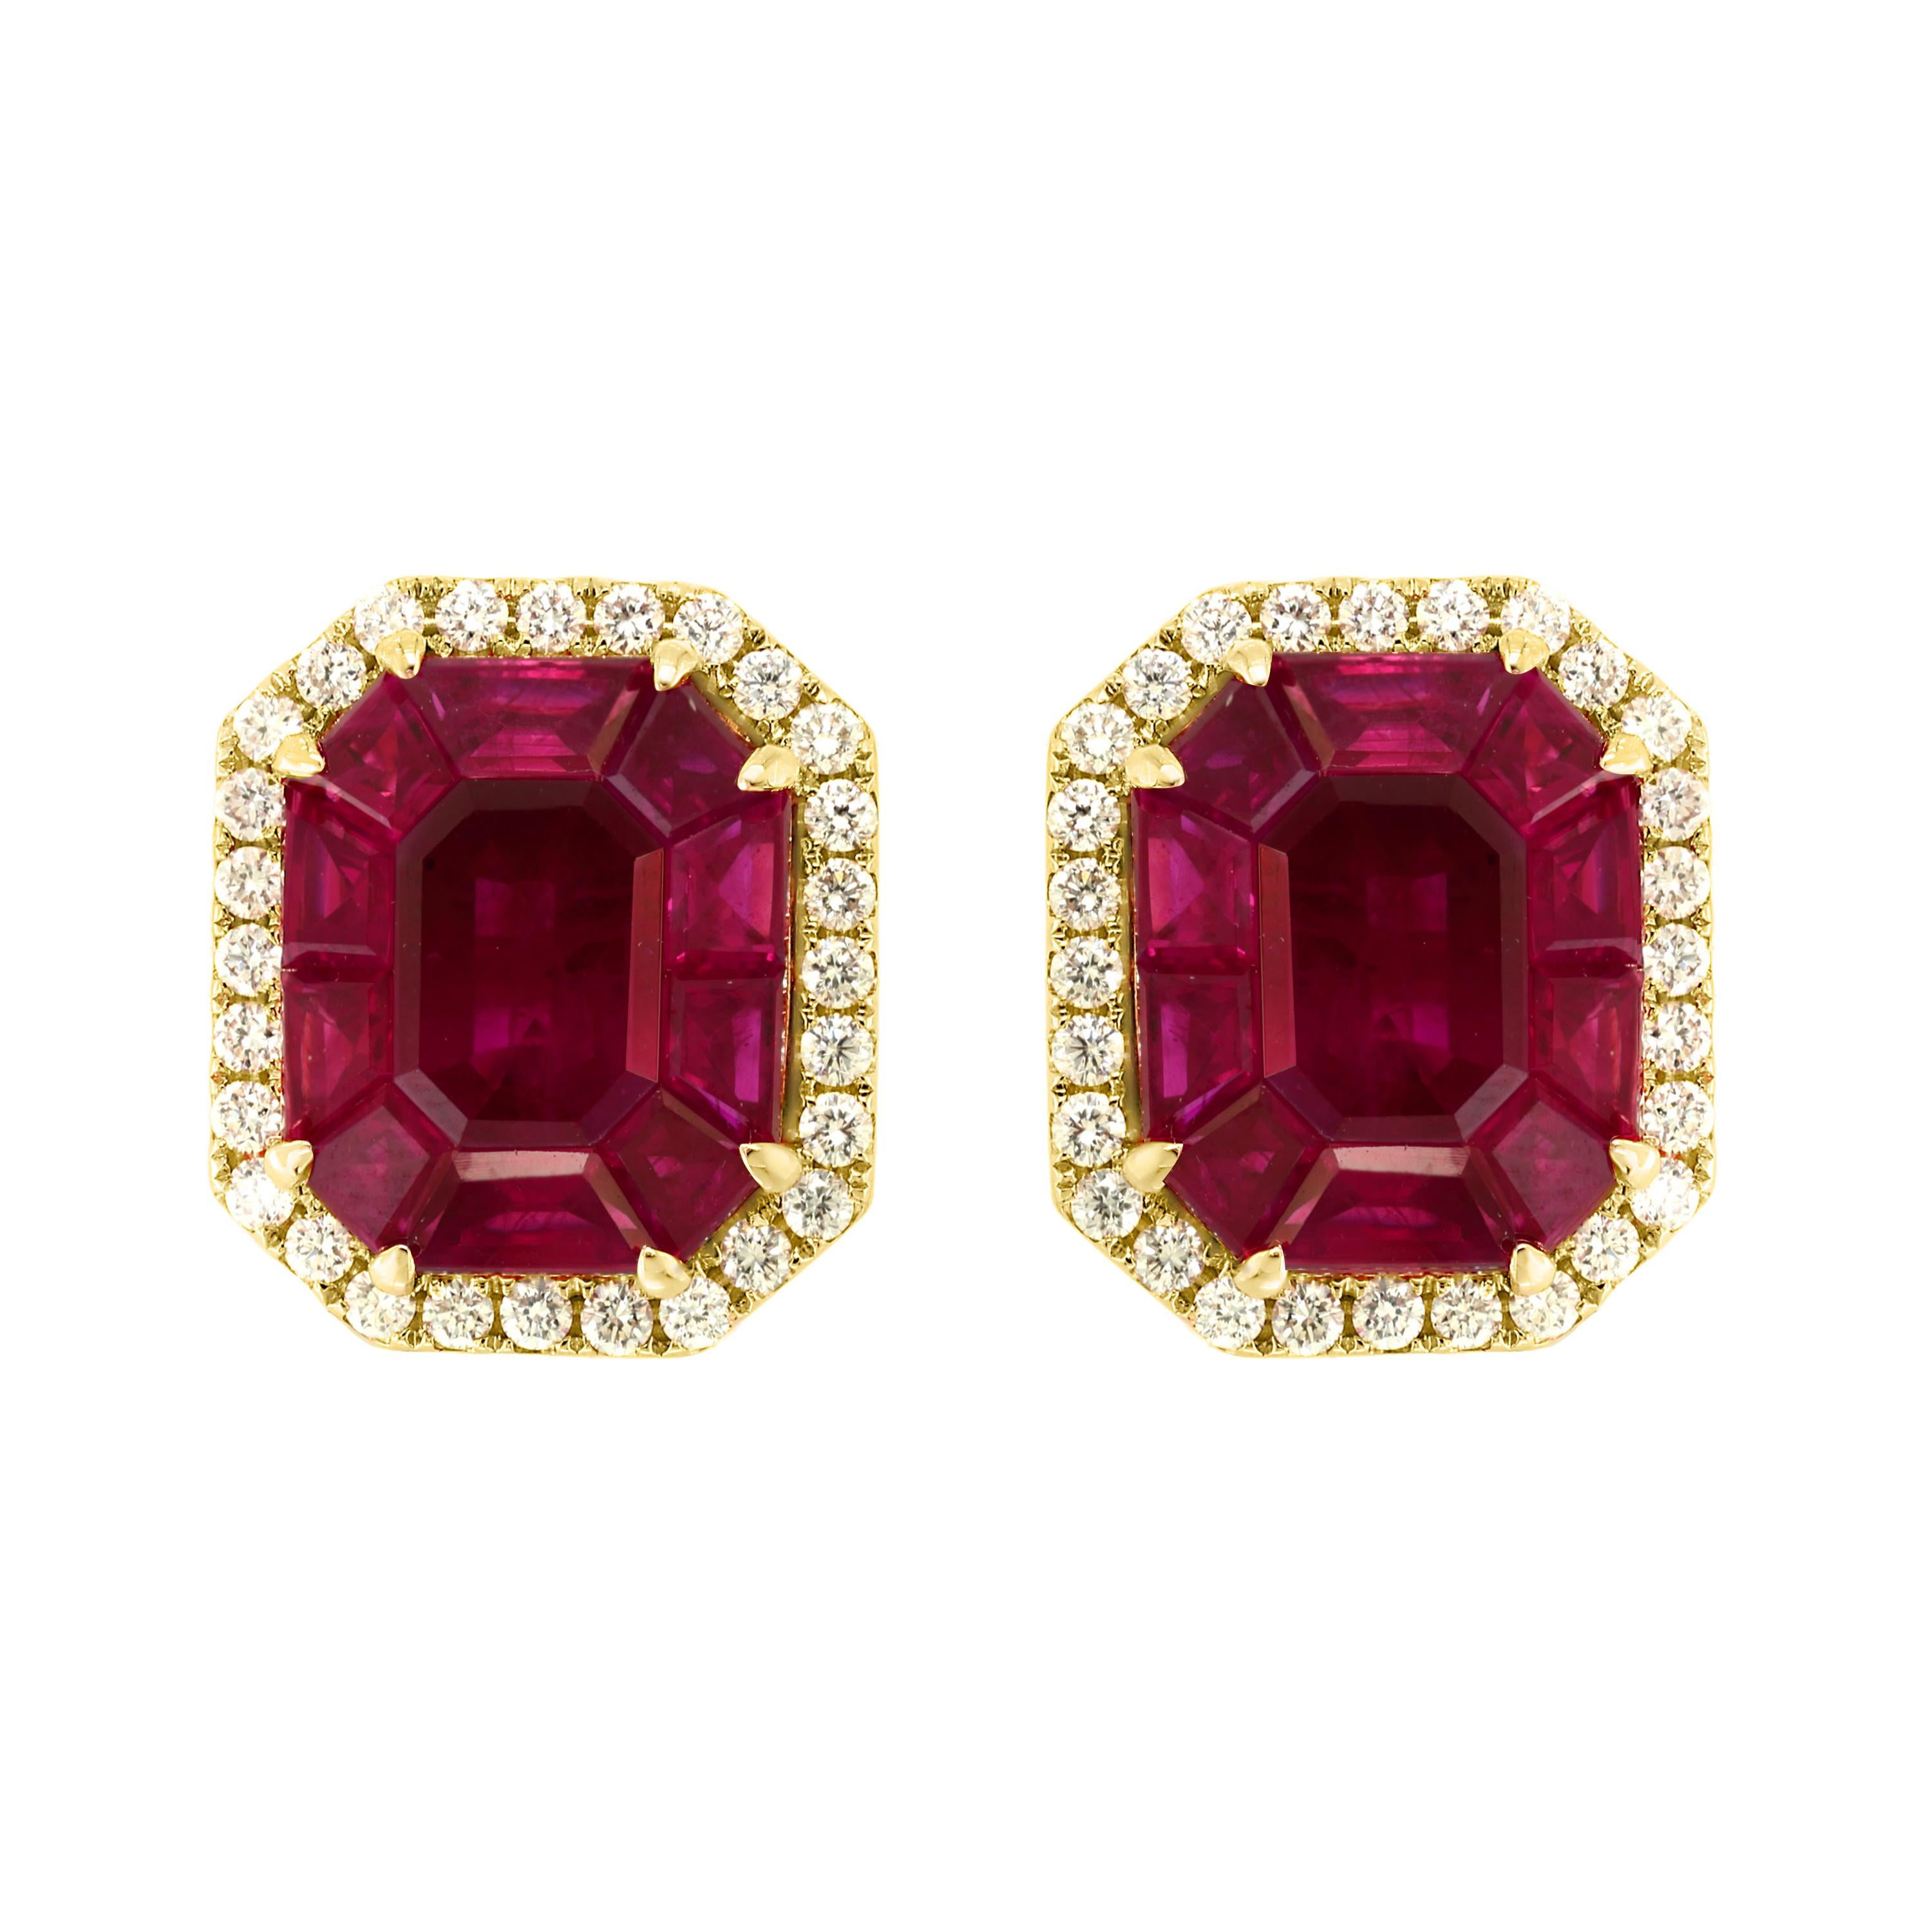 12 Carat Natural Burma Ruby and Diamond Earring in 18 Karat Yellow Gold